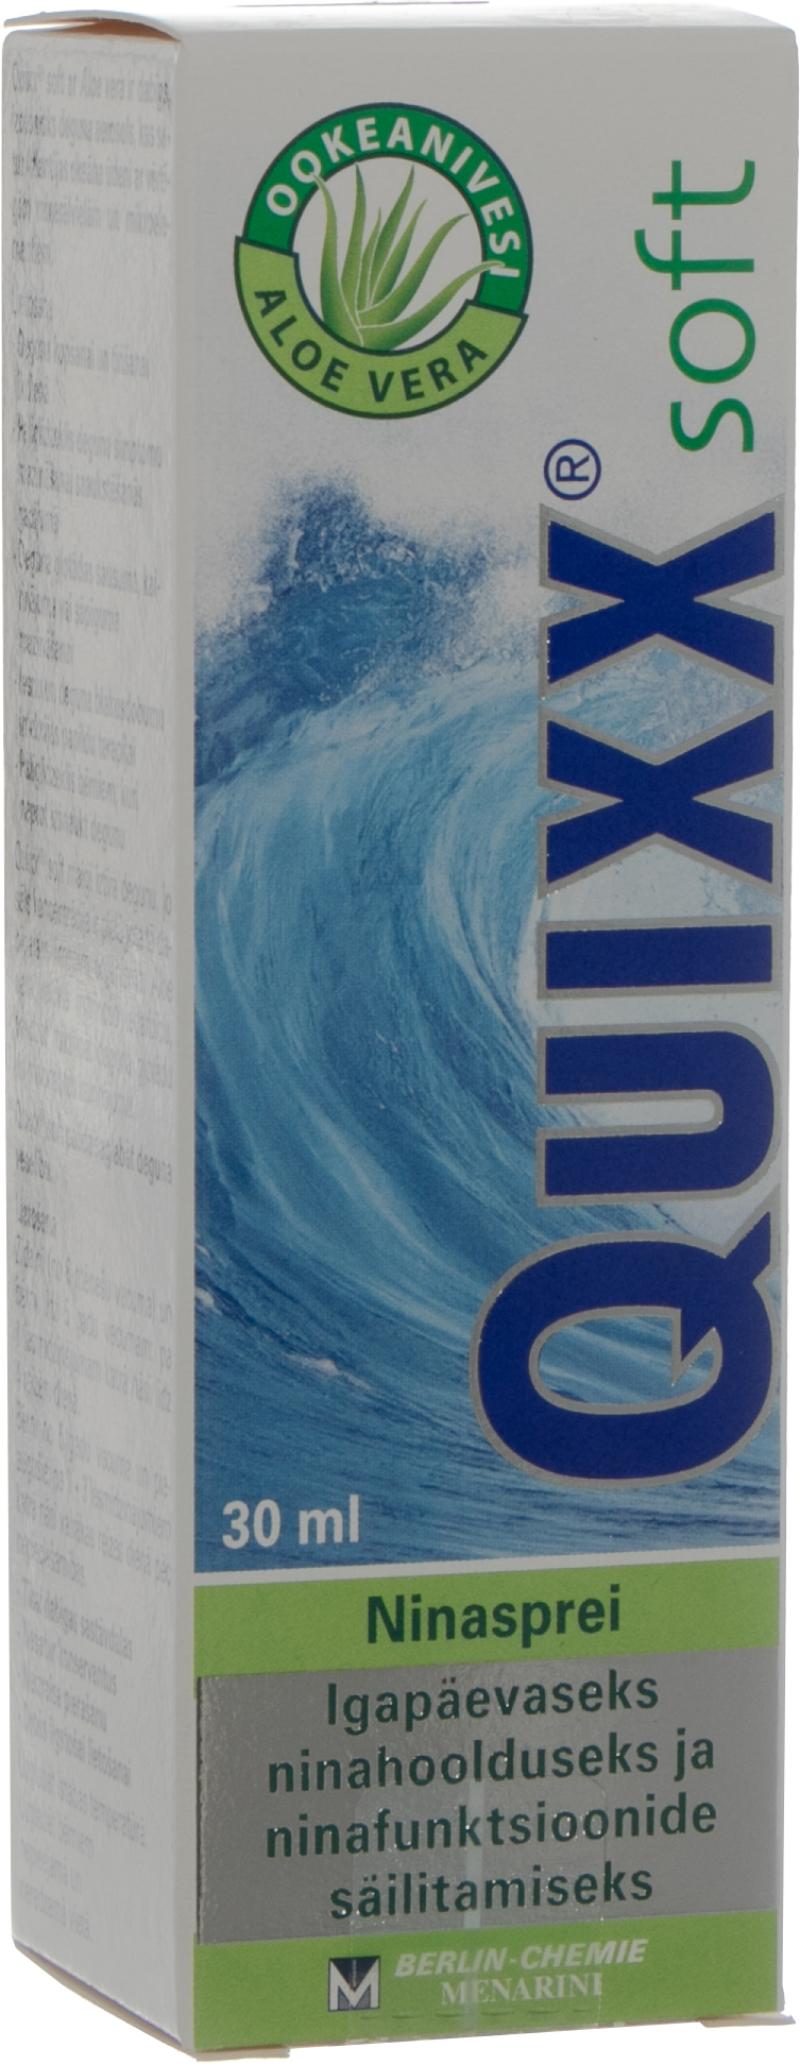 QUIXX Soft nasal spray, 30 ml